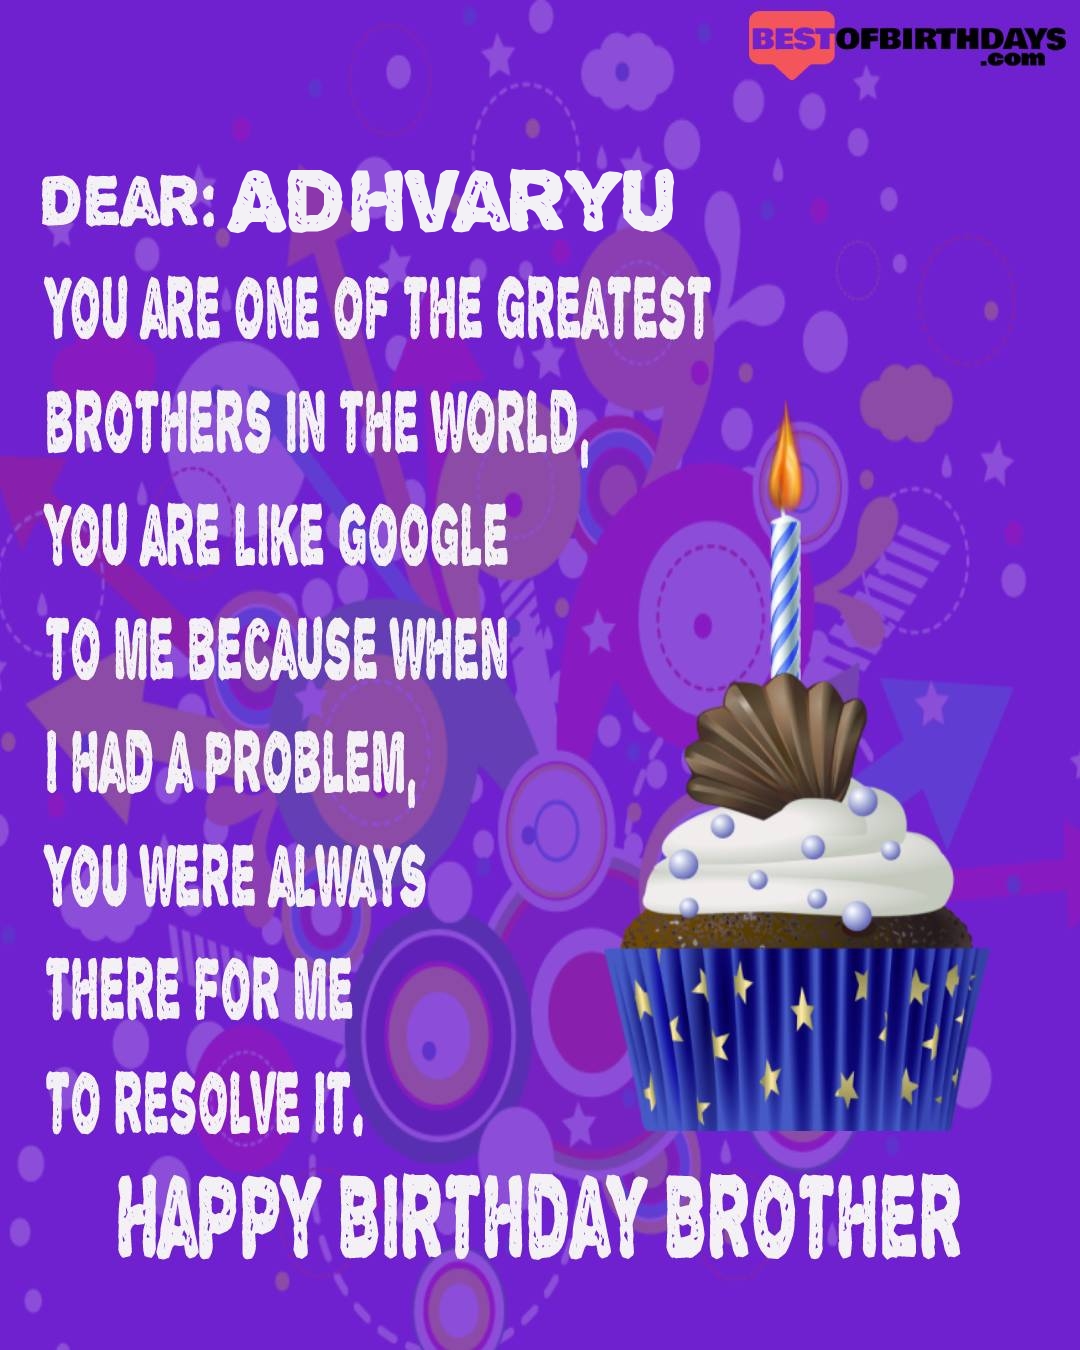 Happy birthday adhvaryu bhai brother bro